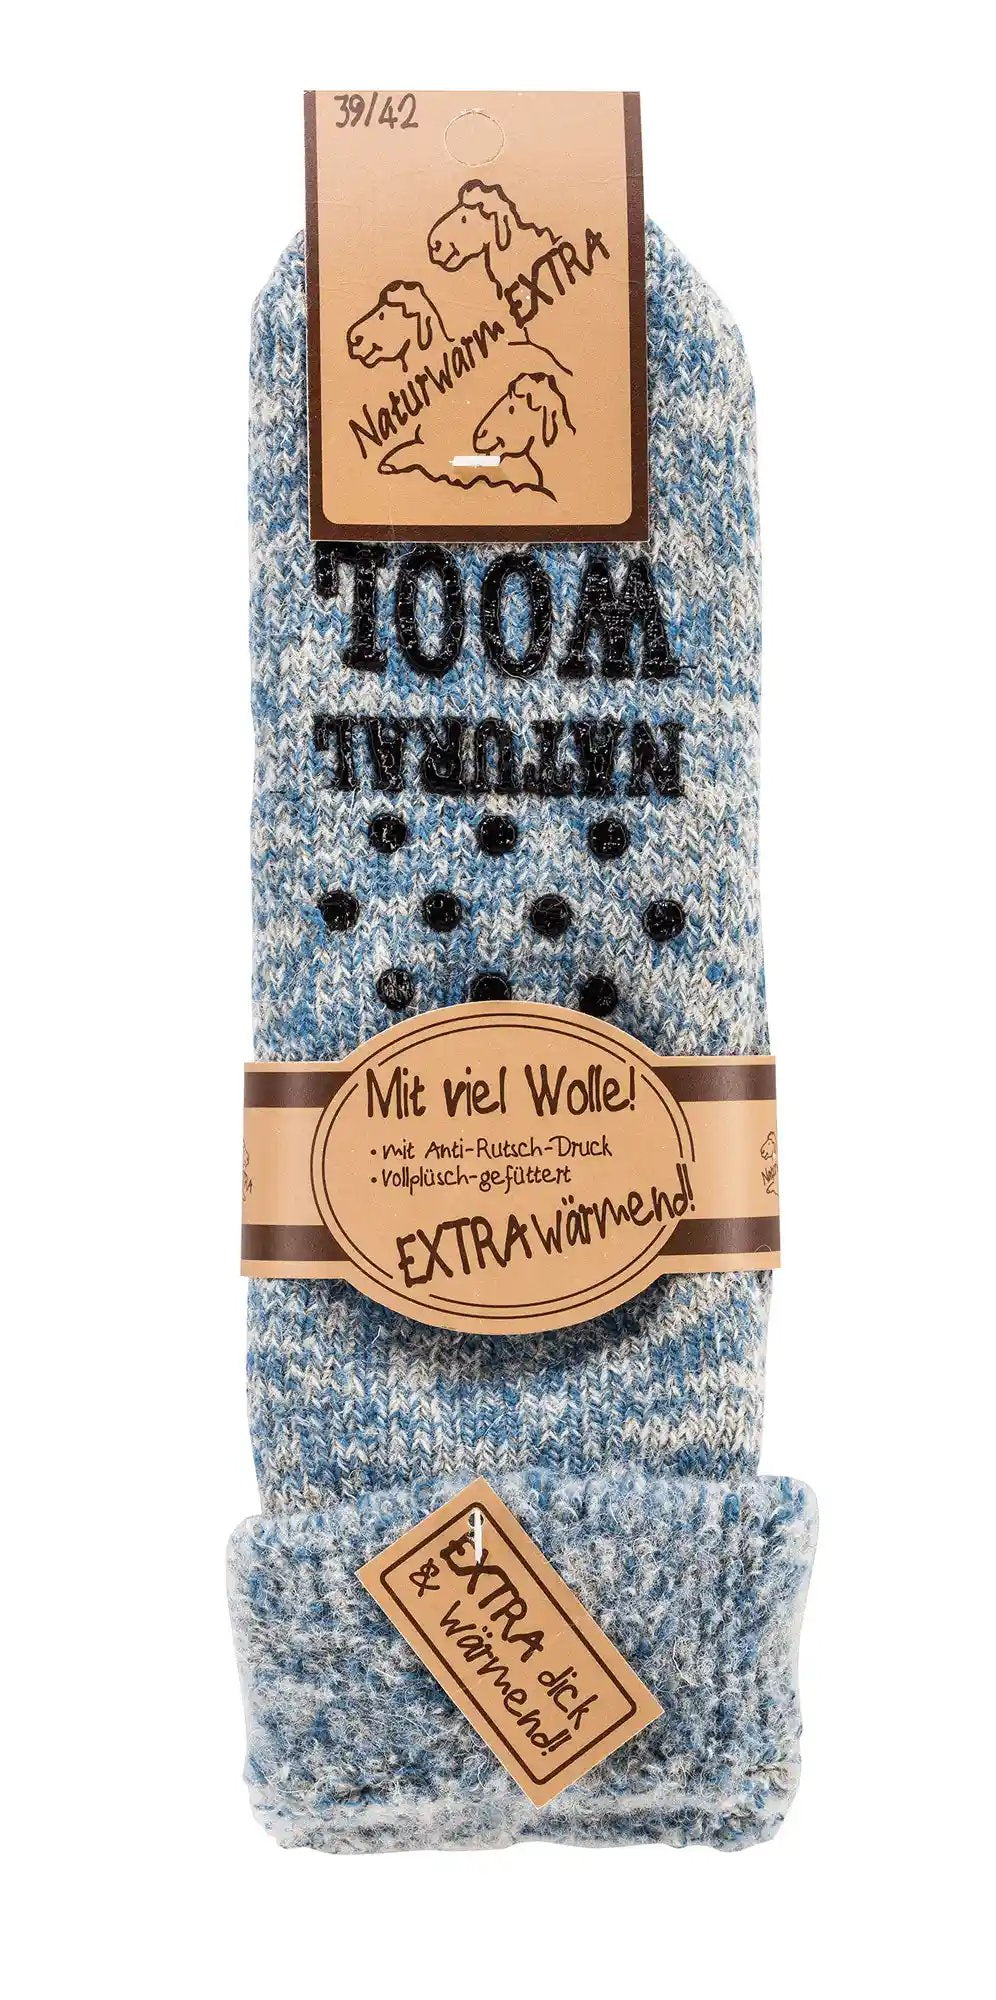 1 pair of MEGA 65% wool thermal ABS socks home socks anti-slip size 35-50